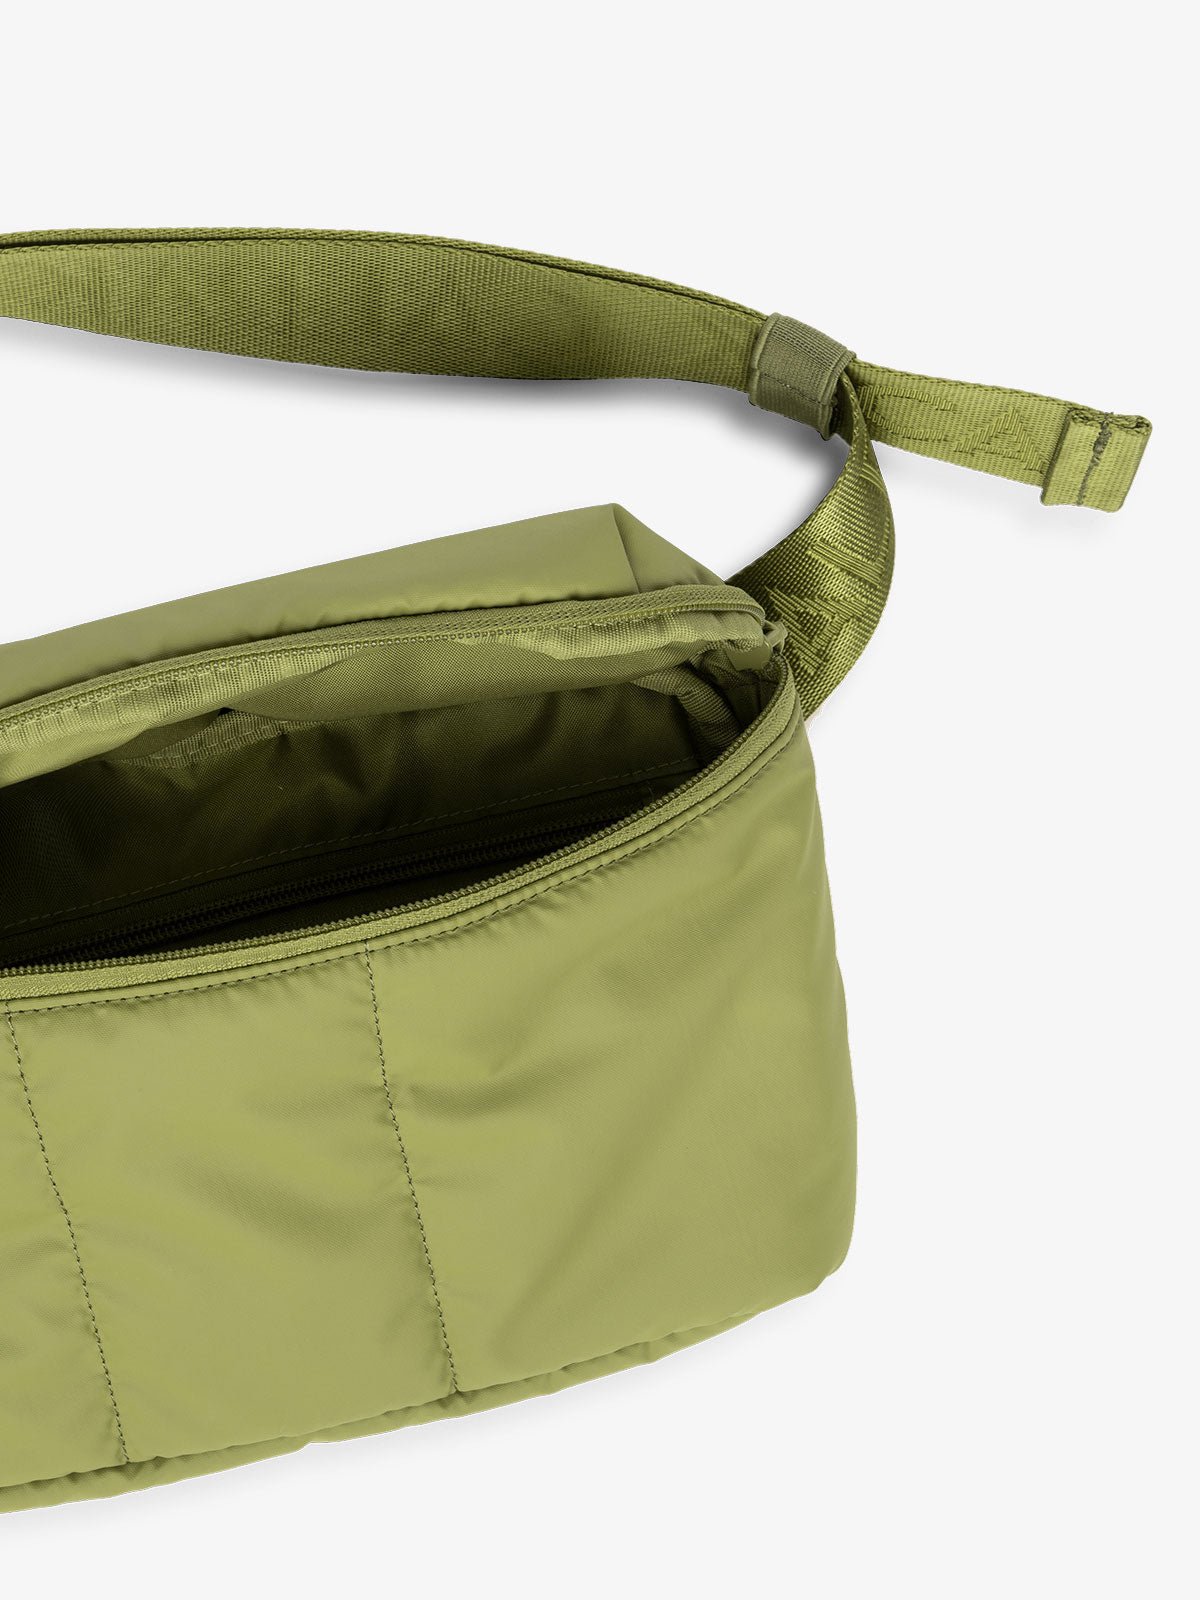 CALPAK Luka Belt Bag close up interior and strap in pistachio green